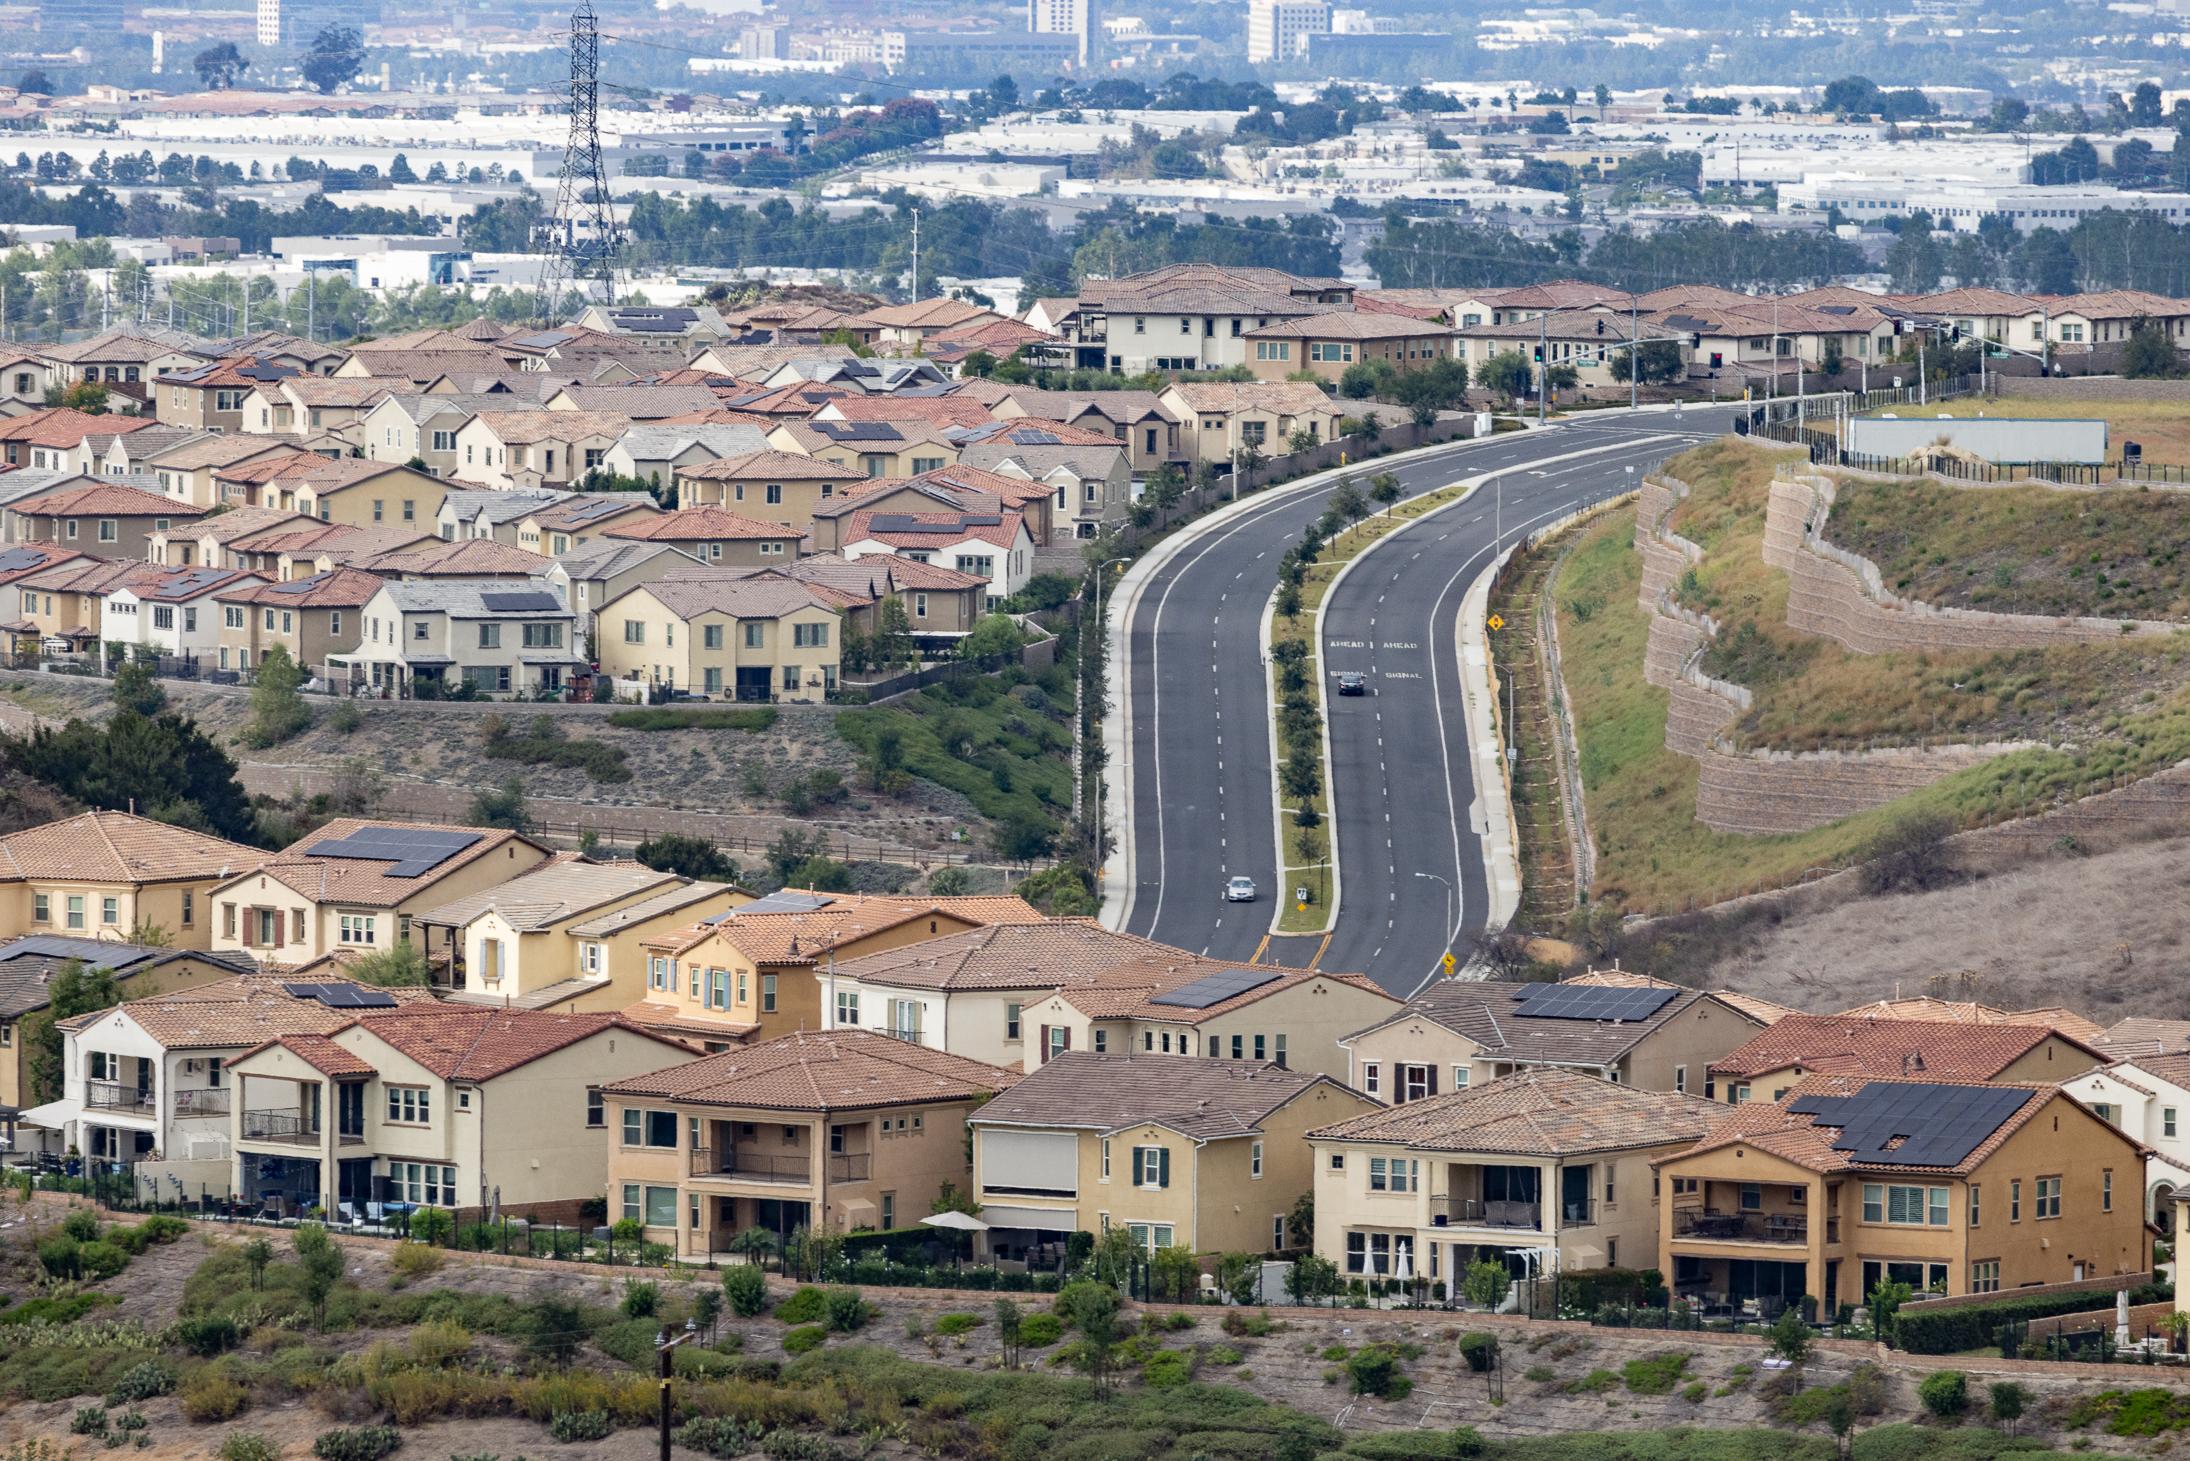 Will ‘Prohousing’ Label Help Alleviate California’s Housing Crisis?